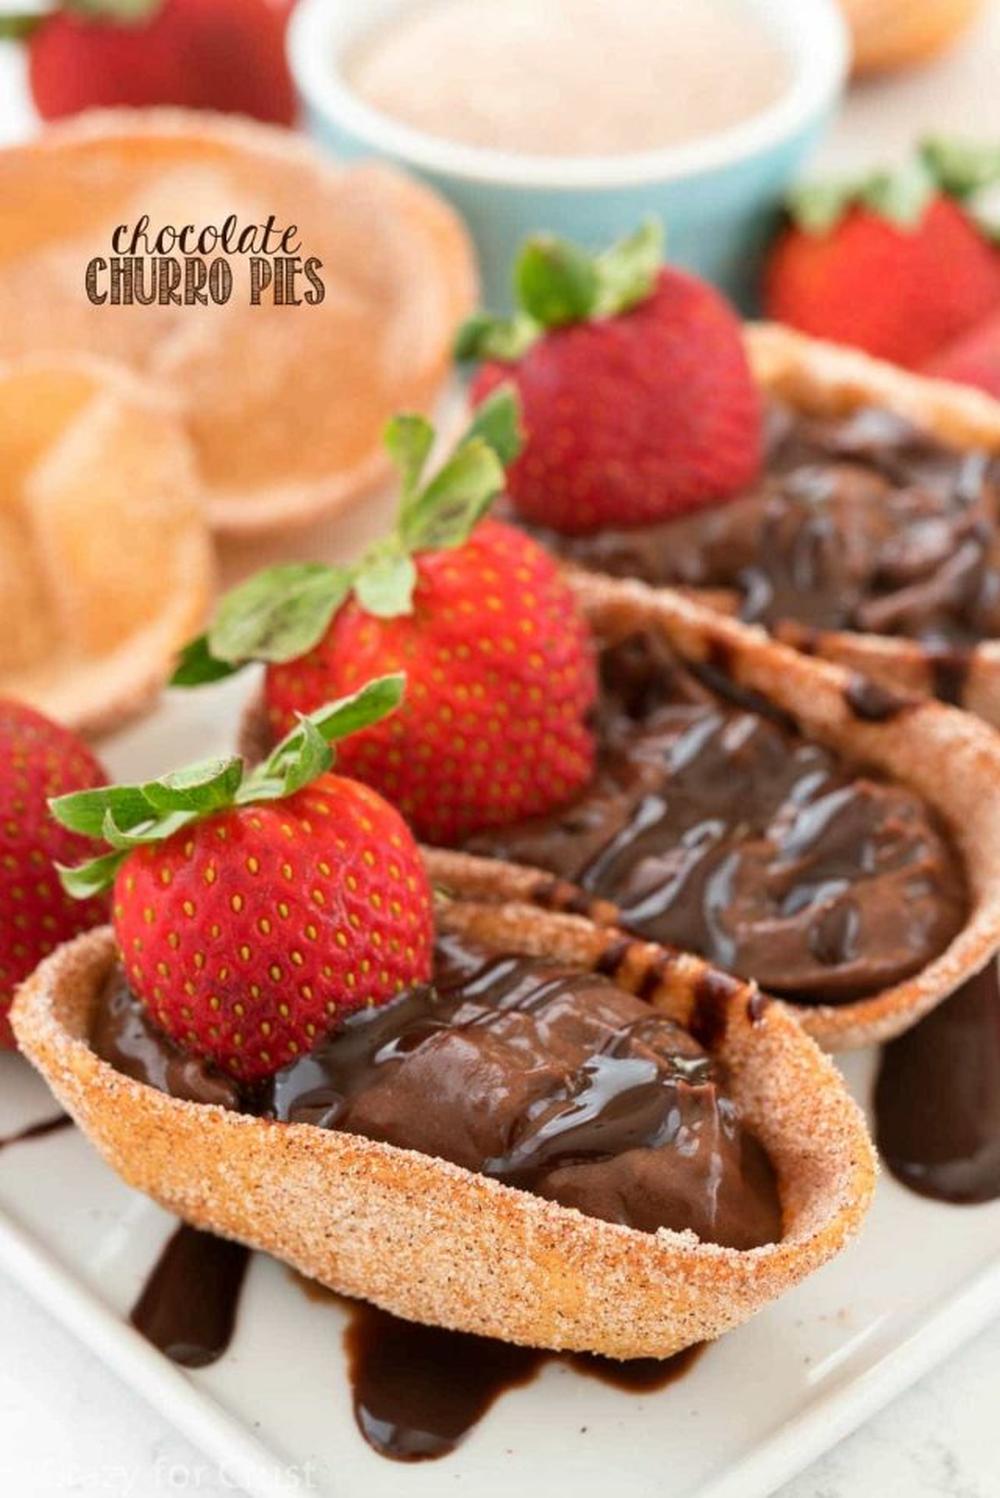 Chocolate churro pies thanksgiving dessert ideas